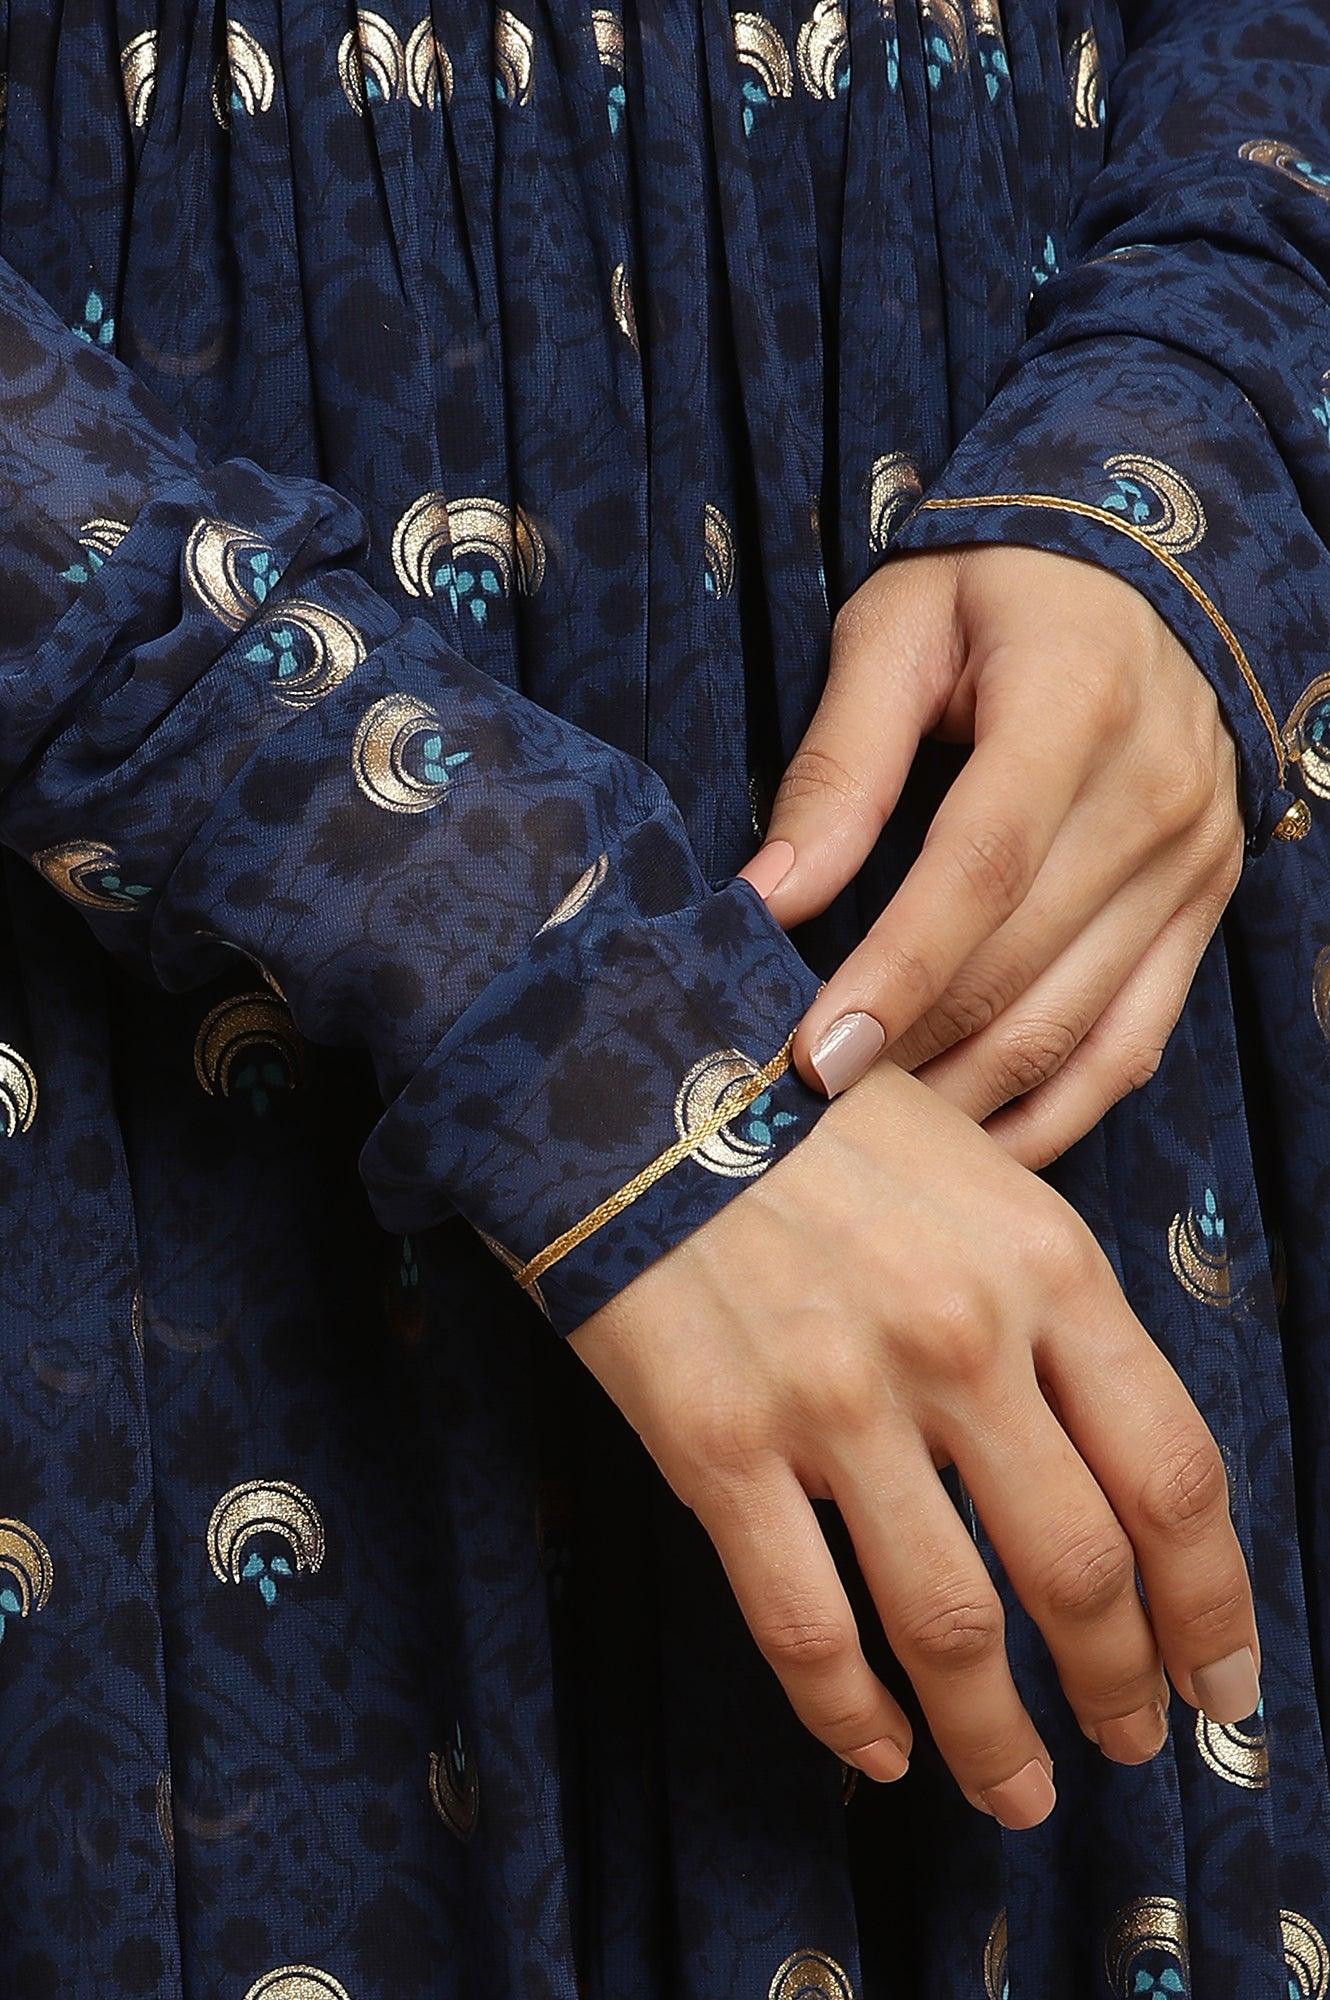 Blue Gathered Embroidered Kurta, Tights And Dupatta Festive Set - wforwoman